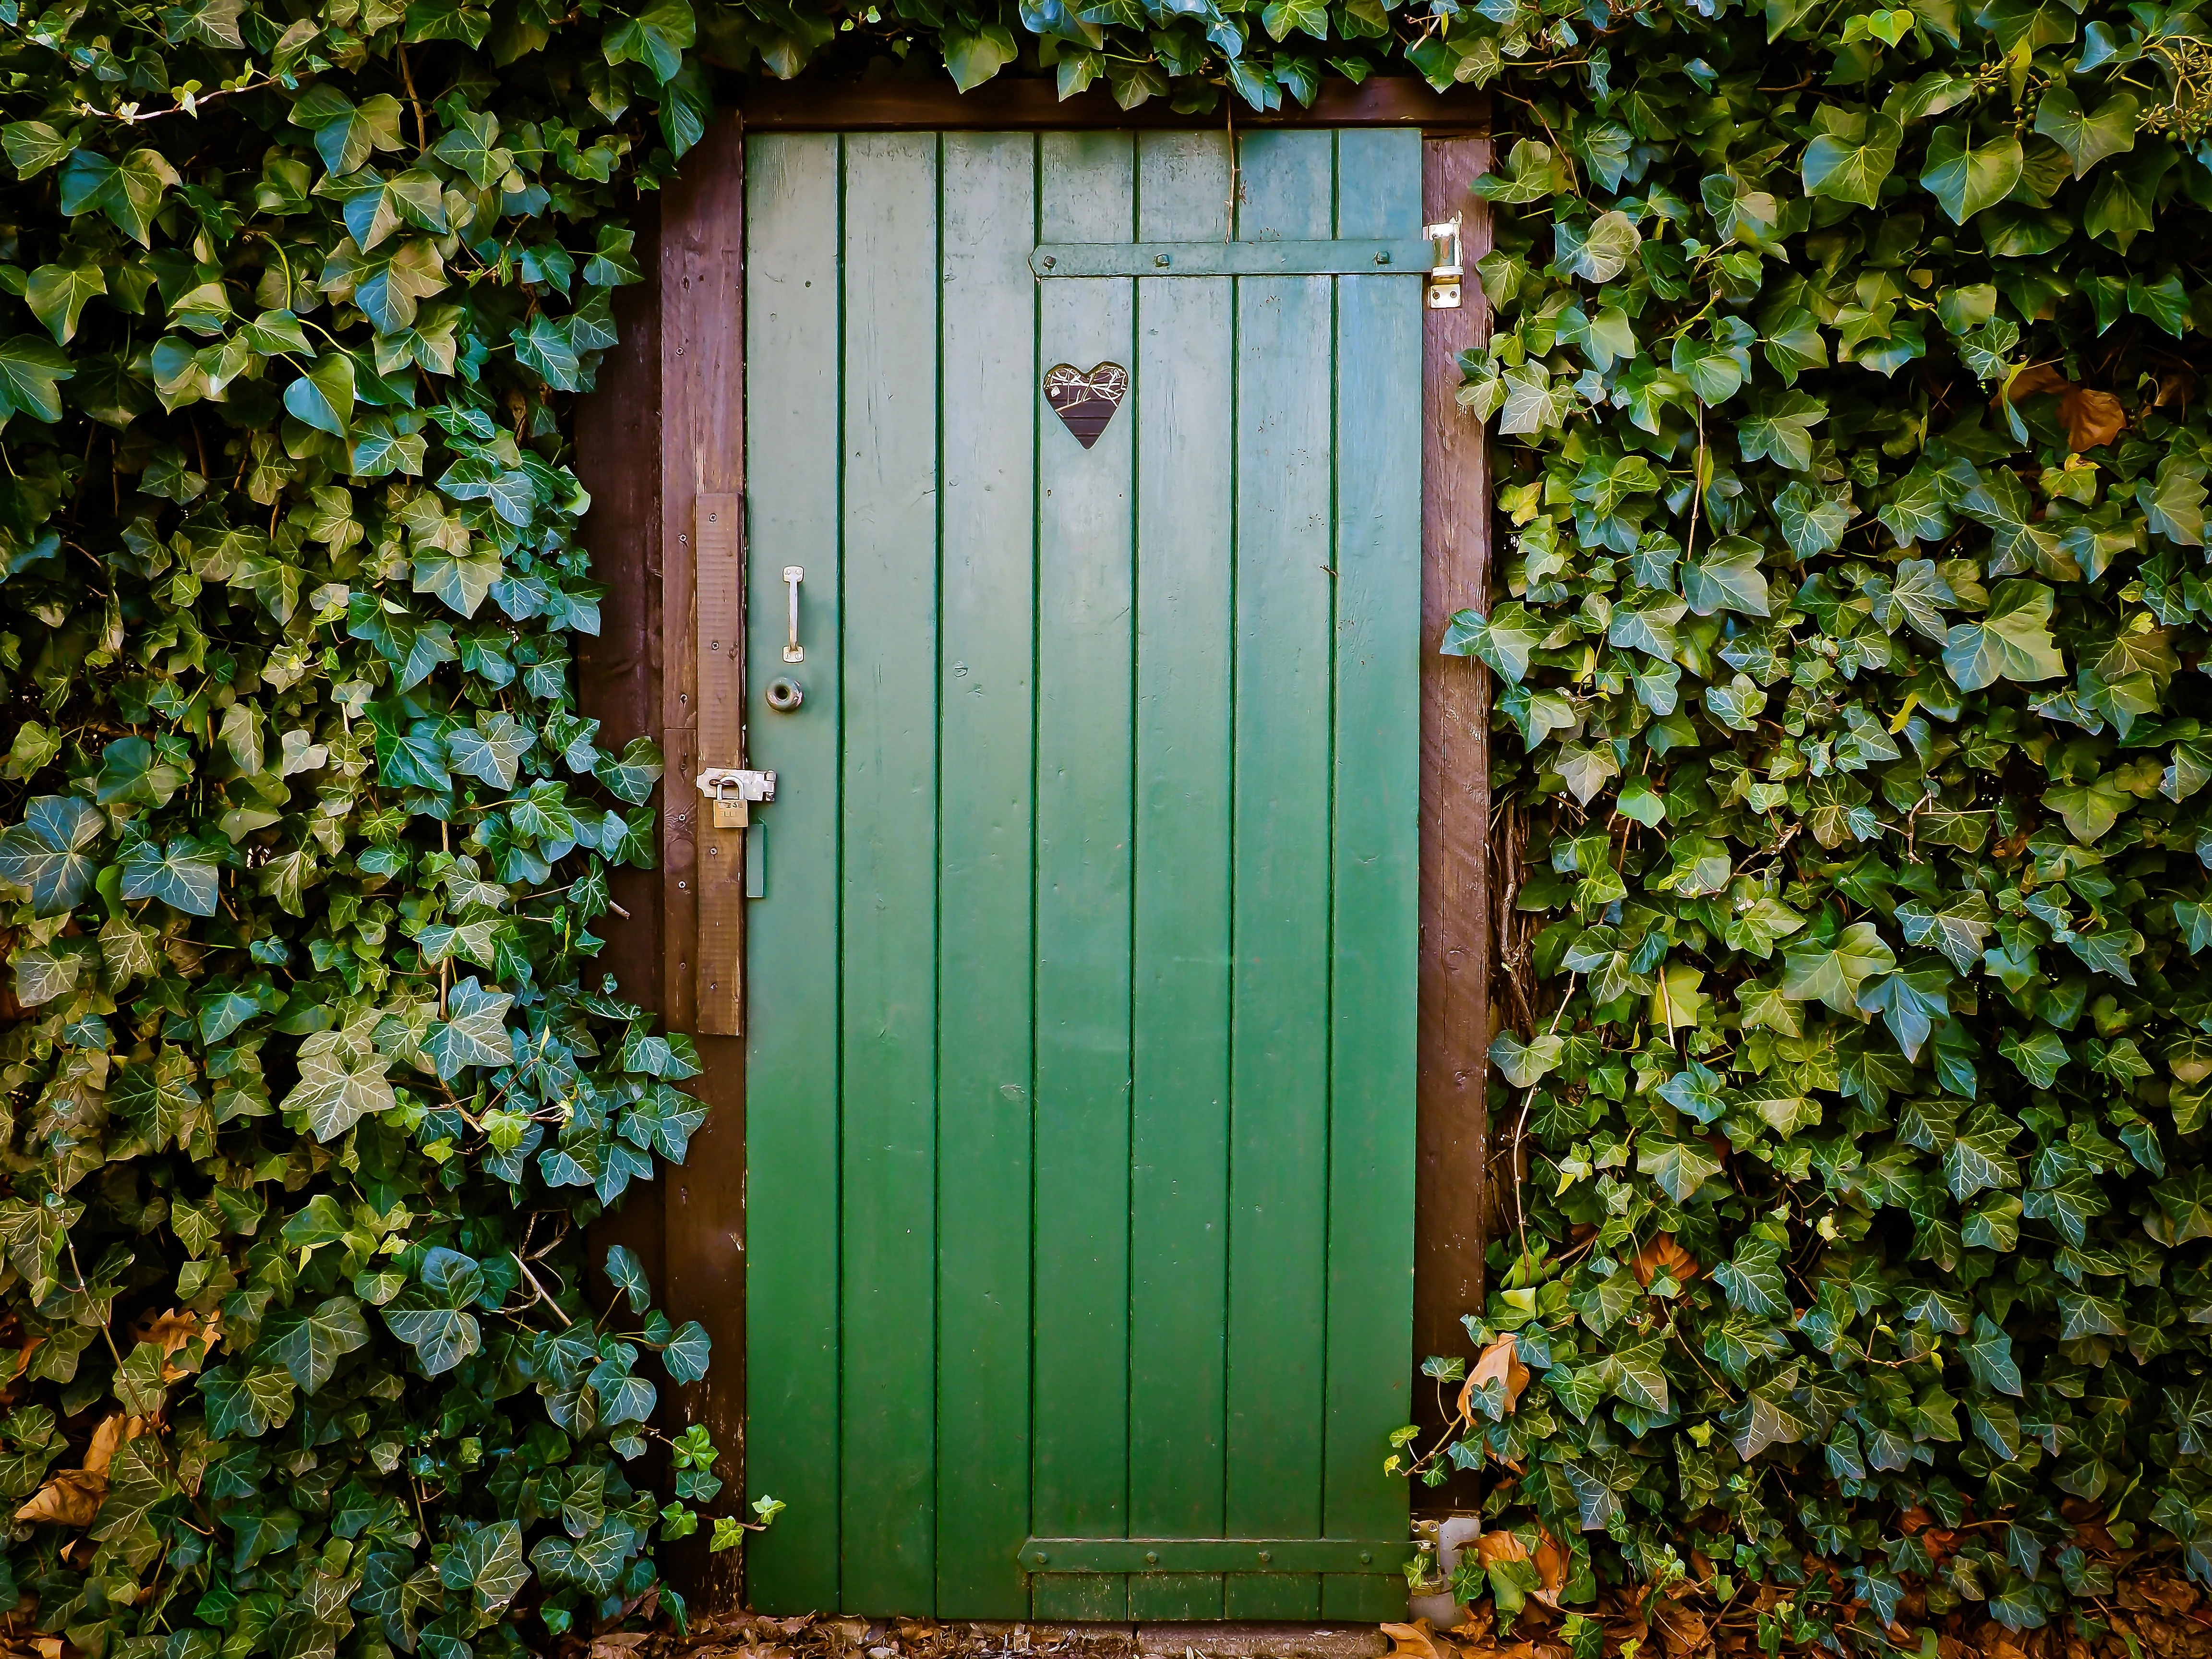 english ivy around the door